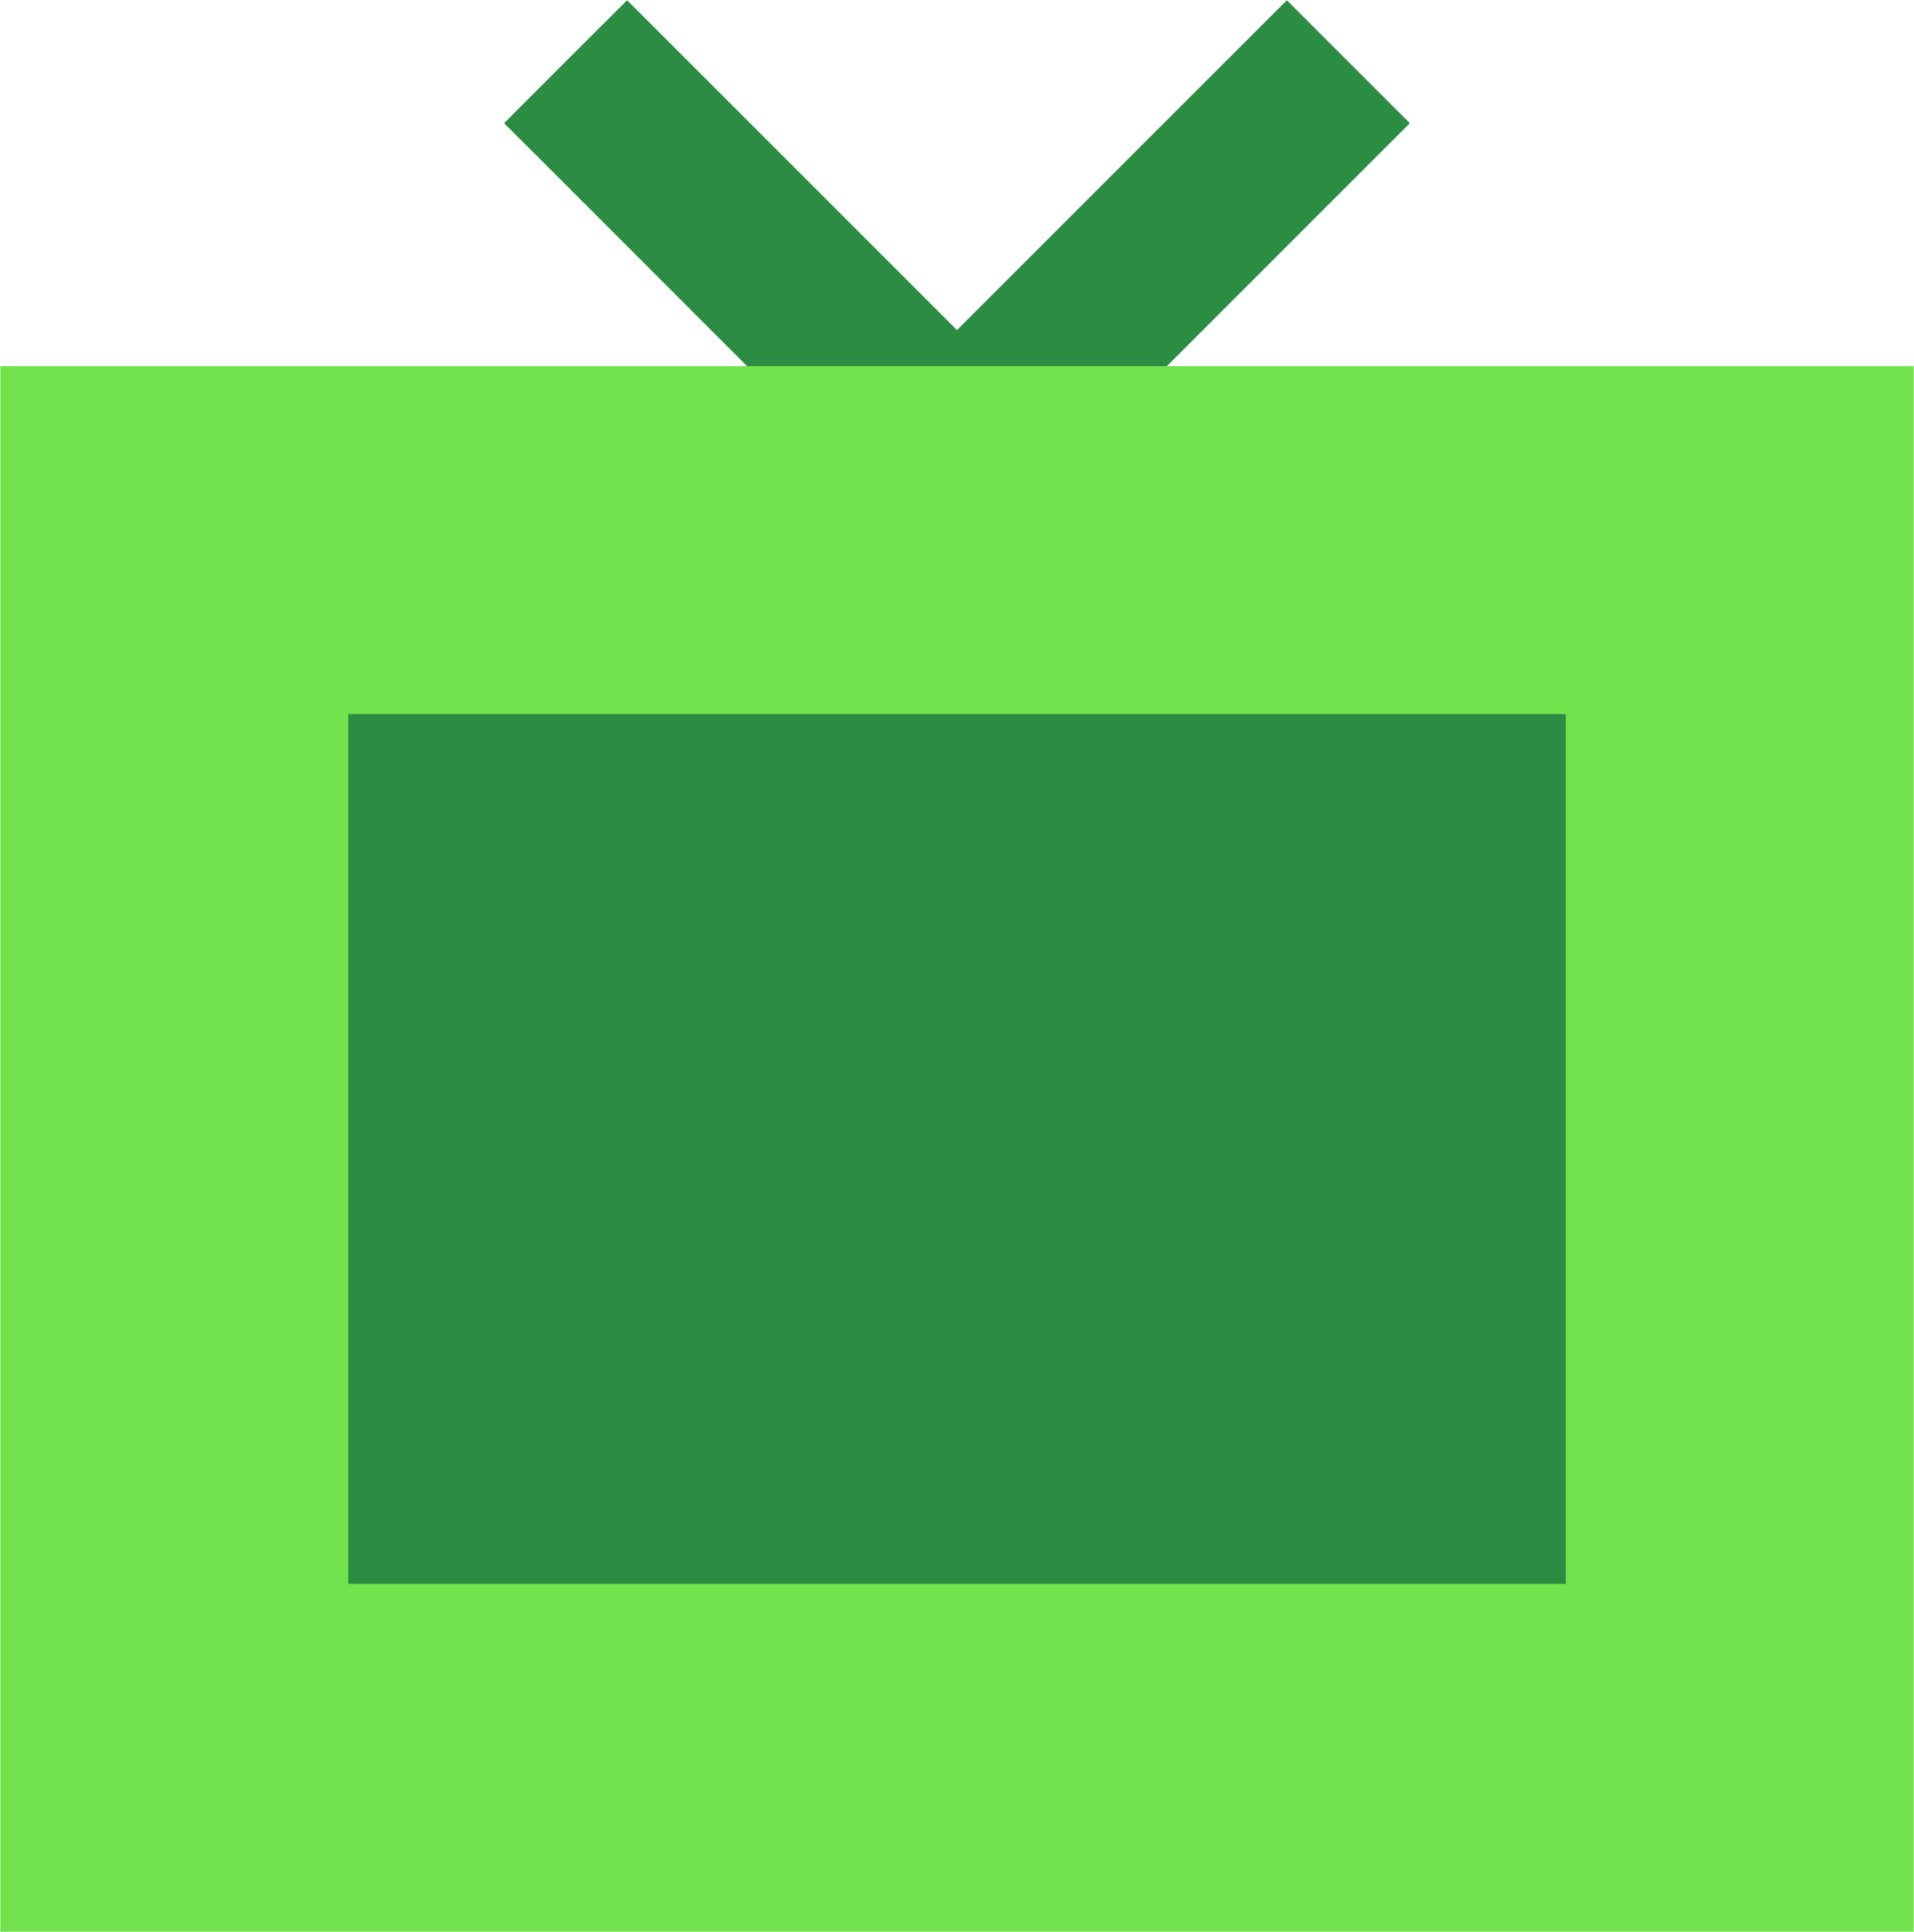 computer screen tv icon